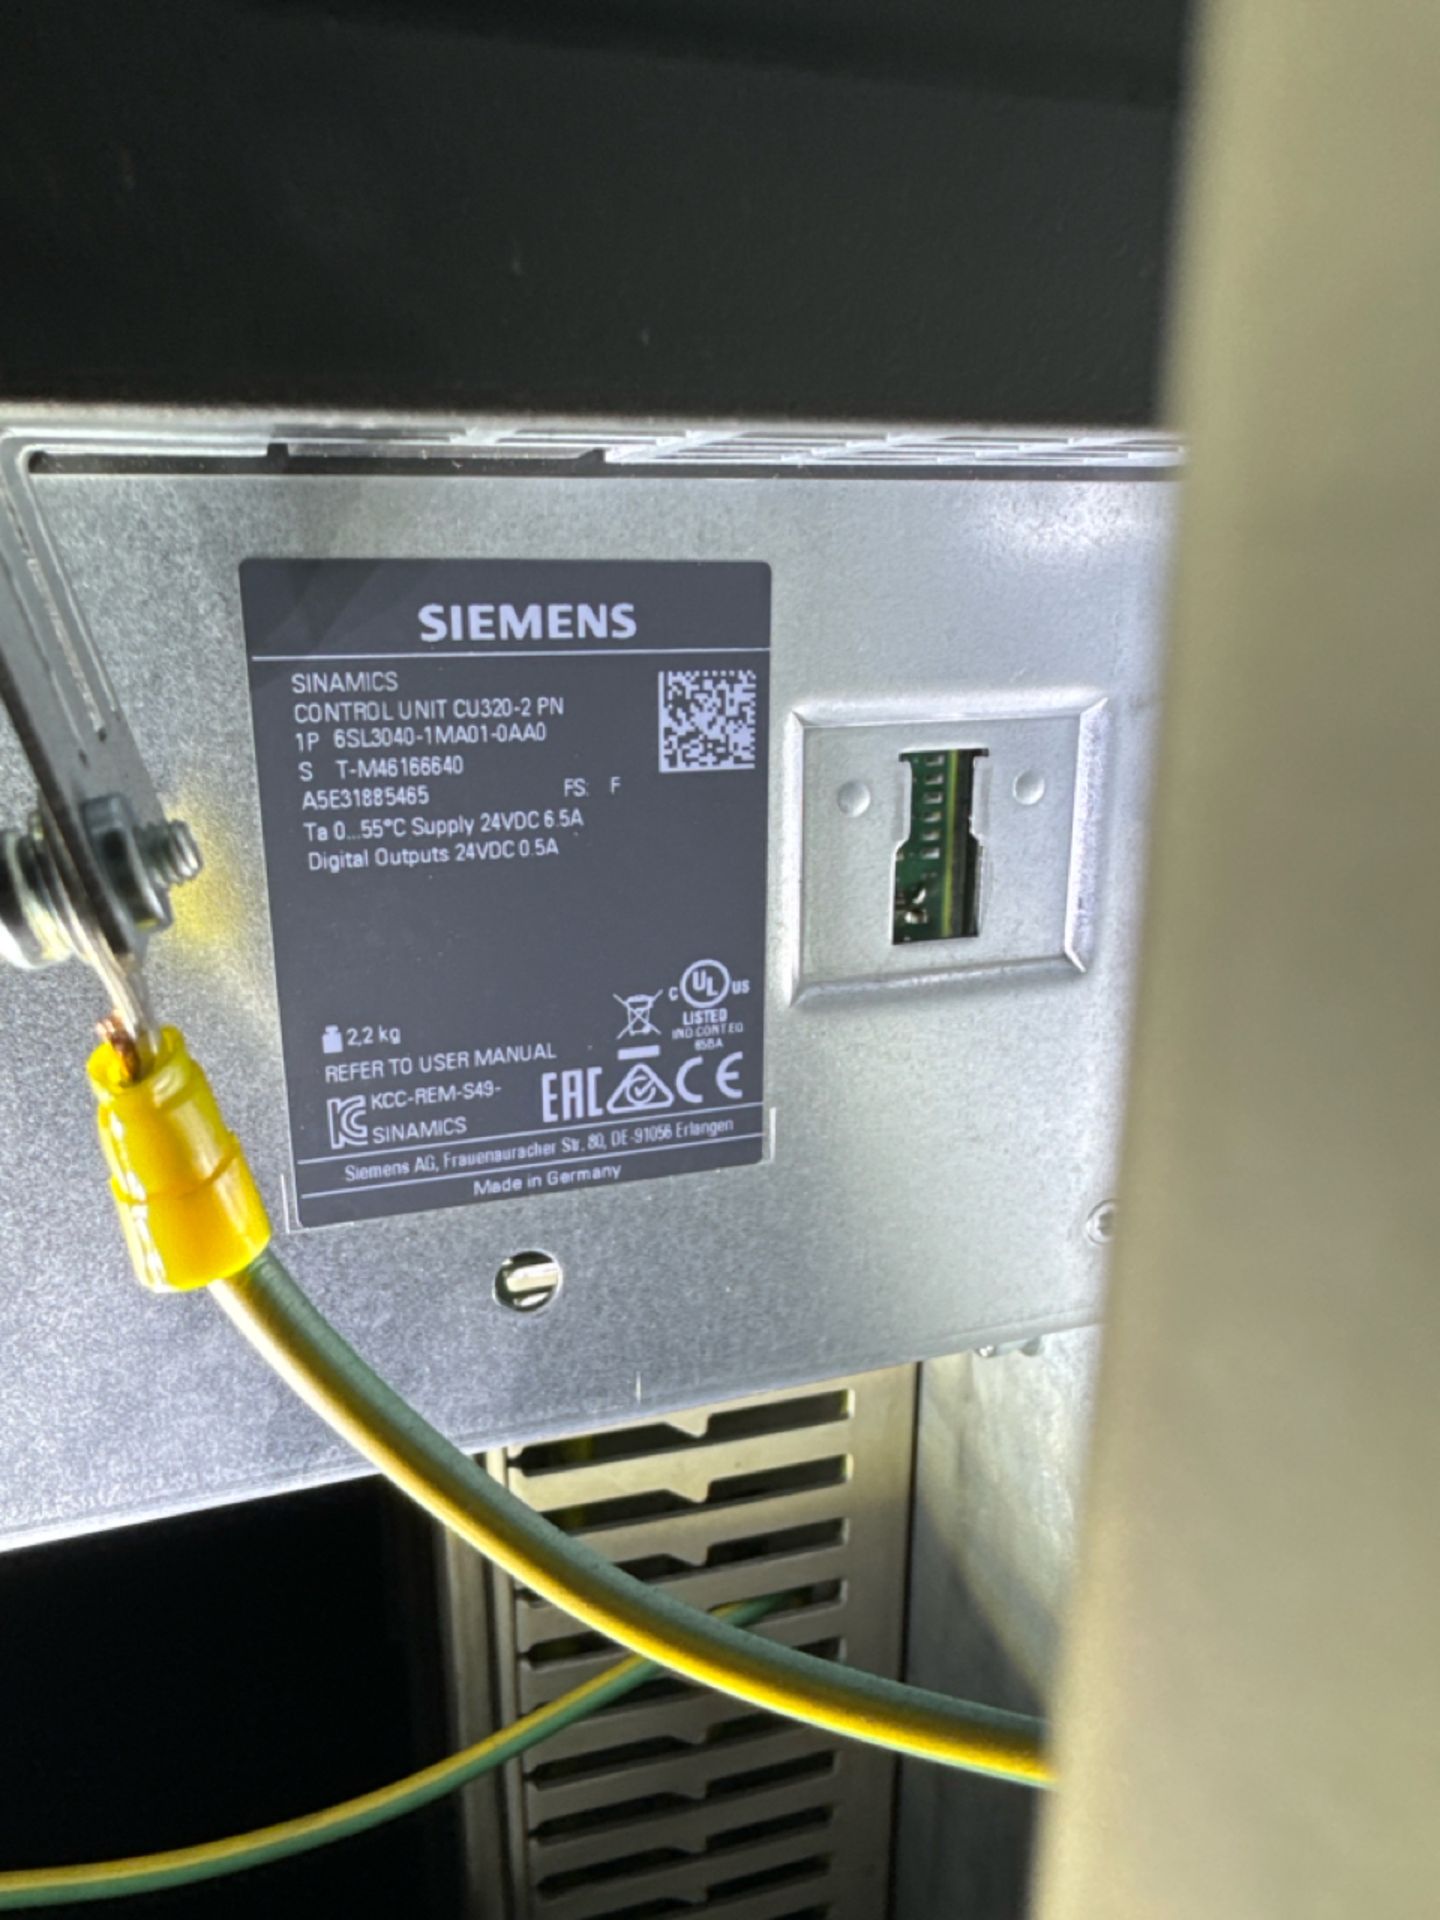 Siemens Sinamics Control Unit CU320-2PN - Image 3 of 3